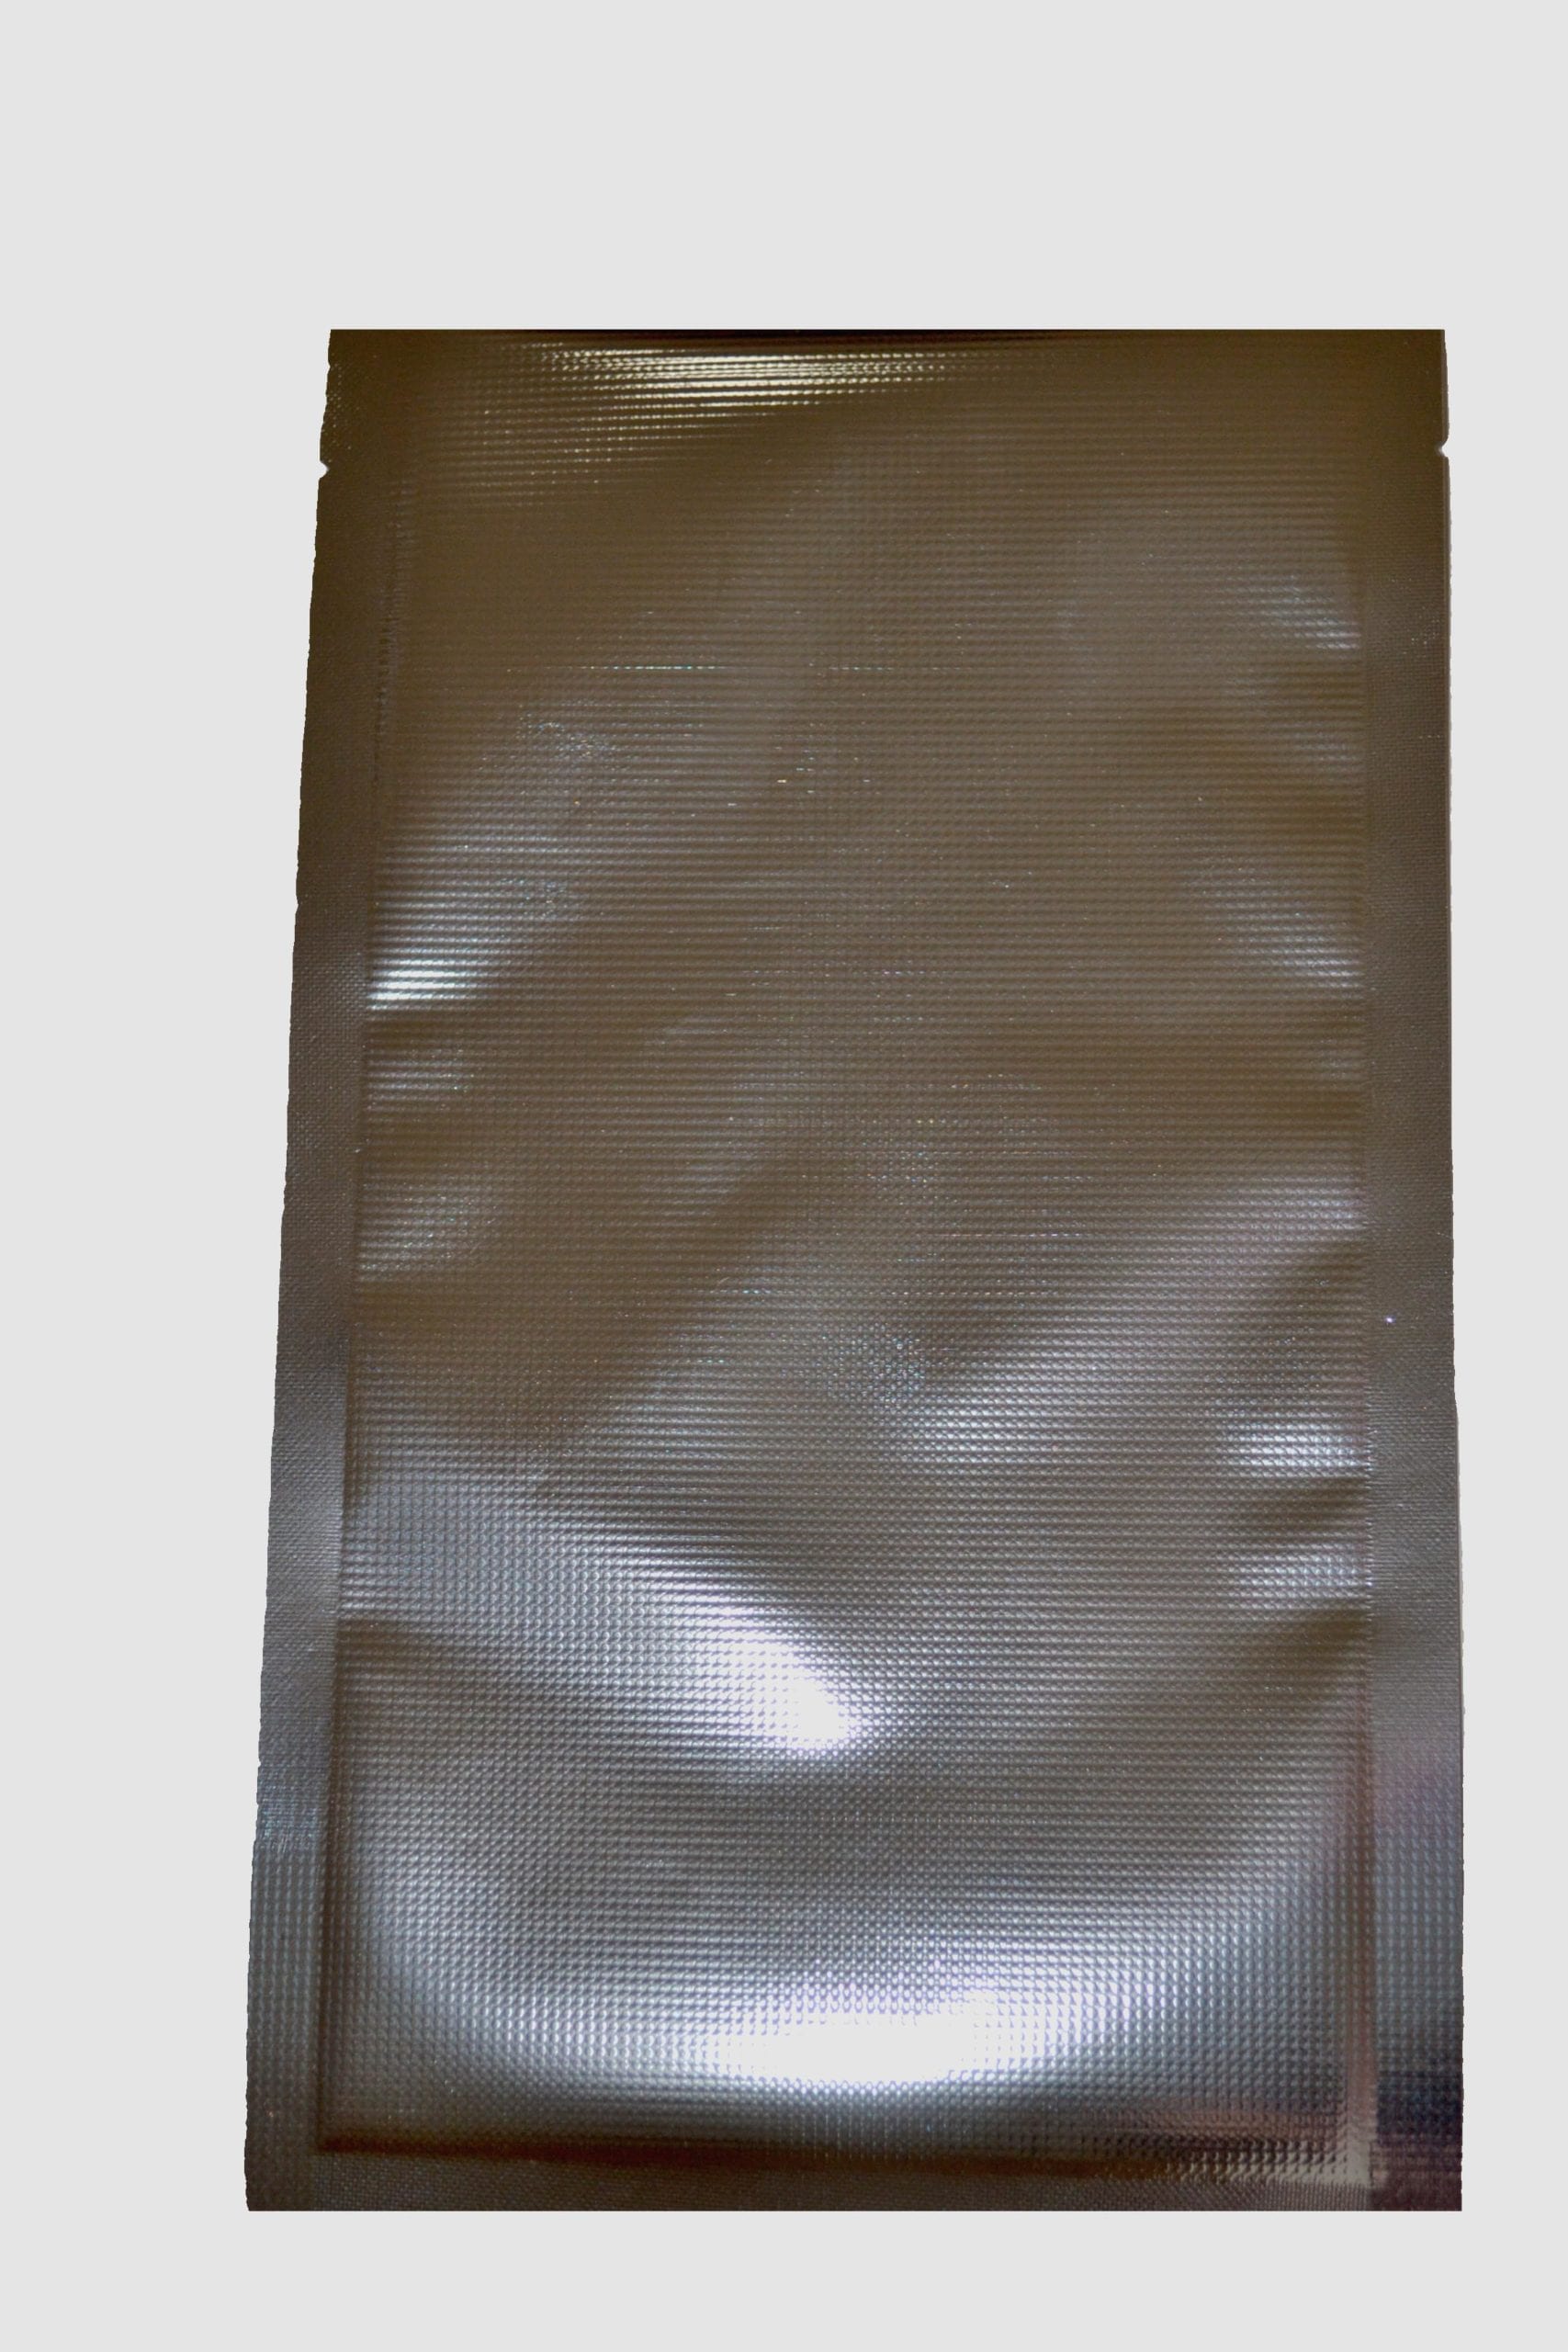 50 ULTRA Quart Sized Vacuum Sealer Bags (9 x 12) | NESCO